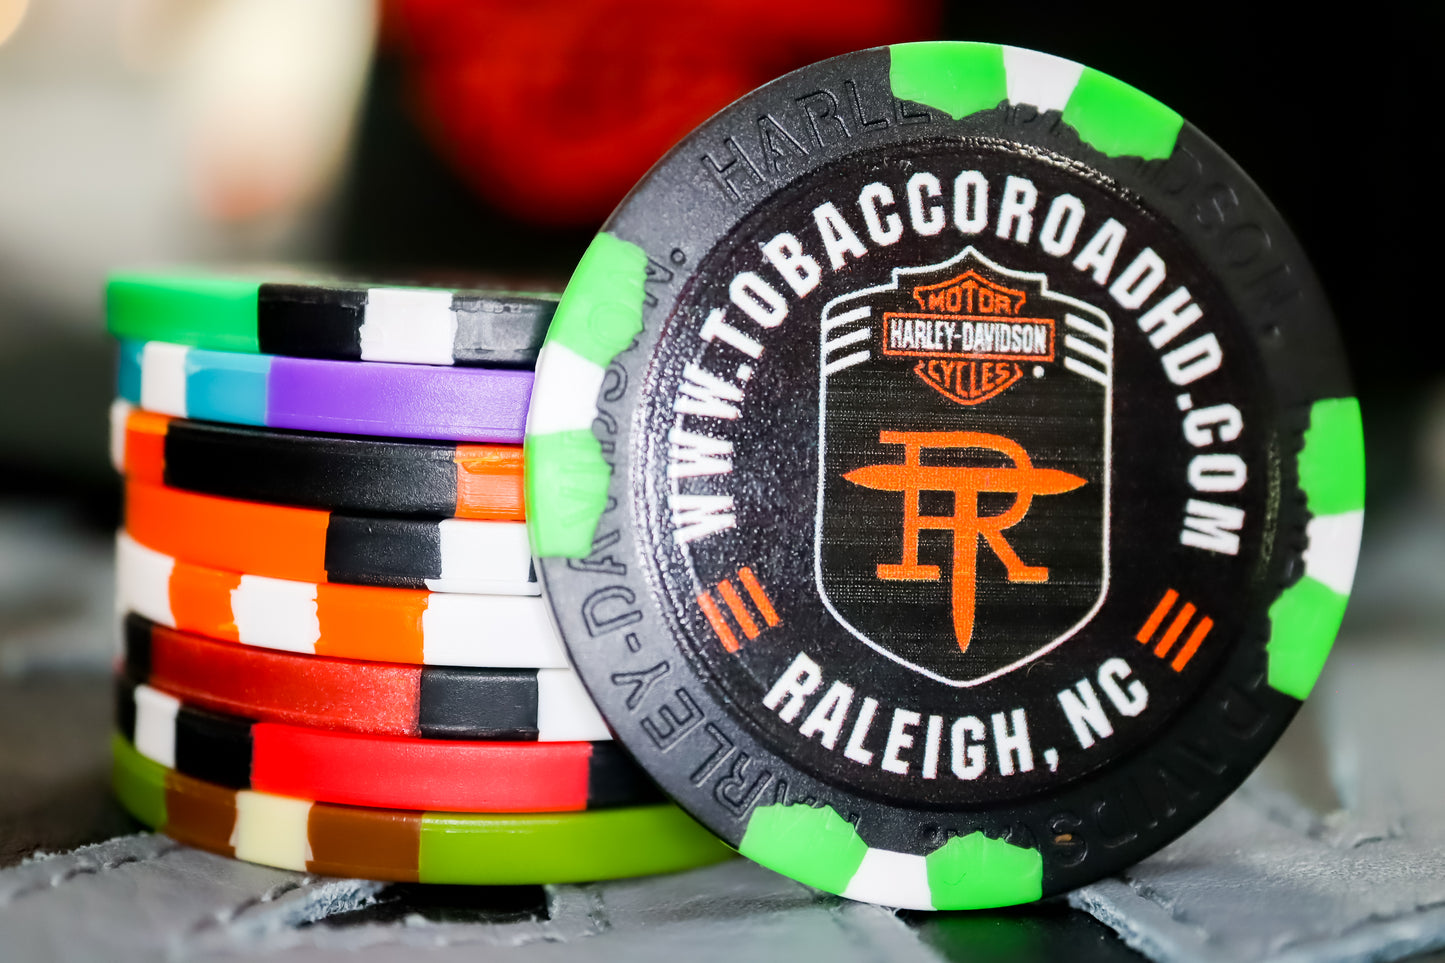 Tobacco Road H-D Poker Chips